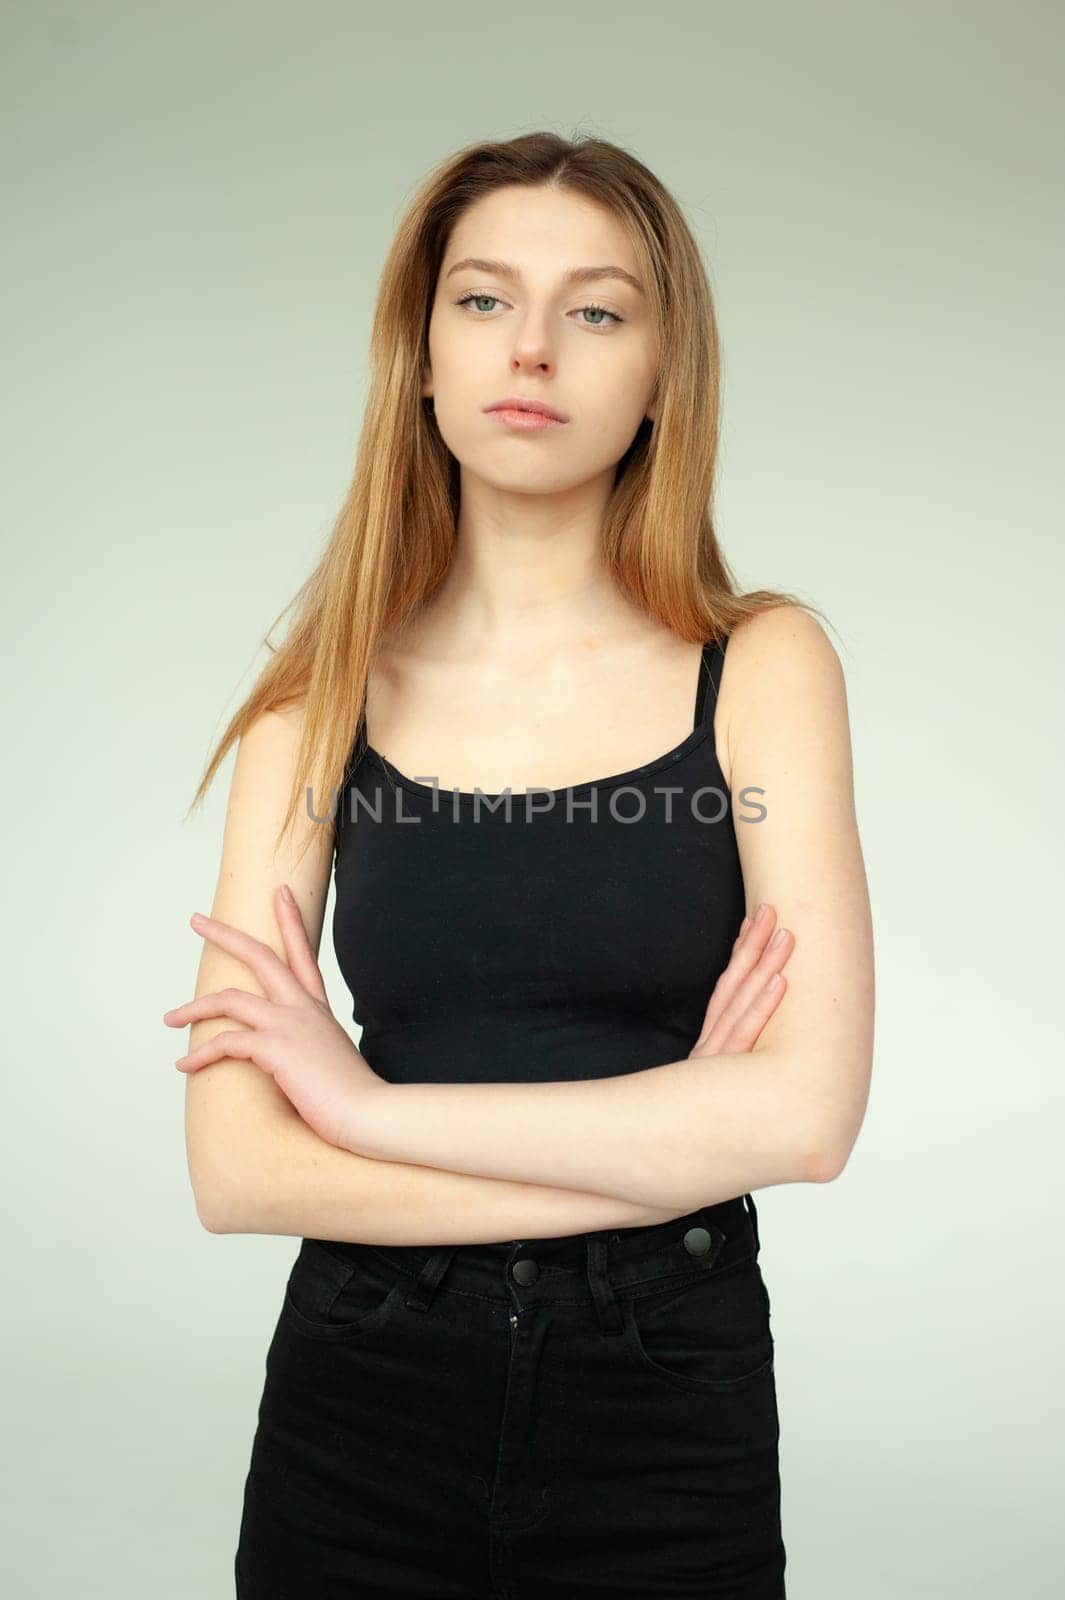 Studio model test, snap, polaroid. Beautiful young european woman on white background by OleksandrLipko